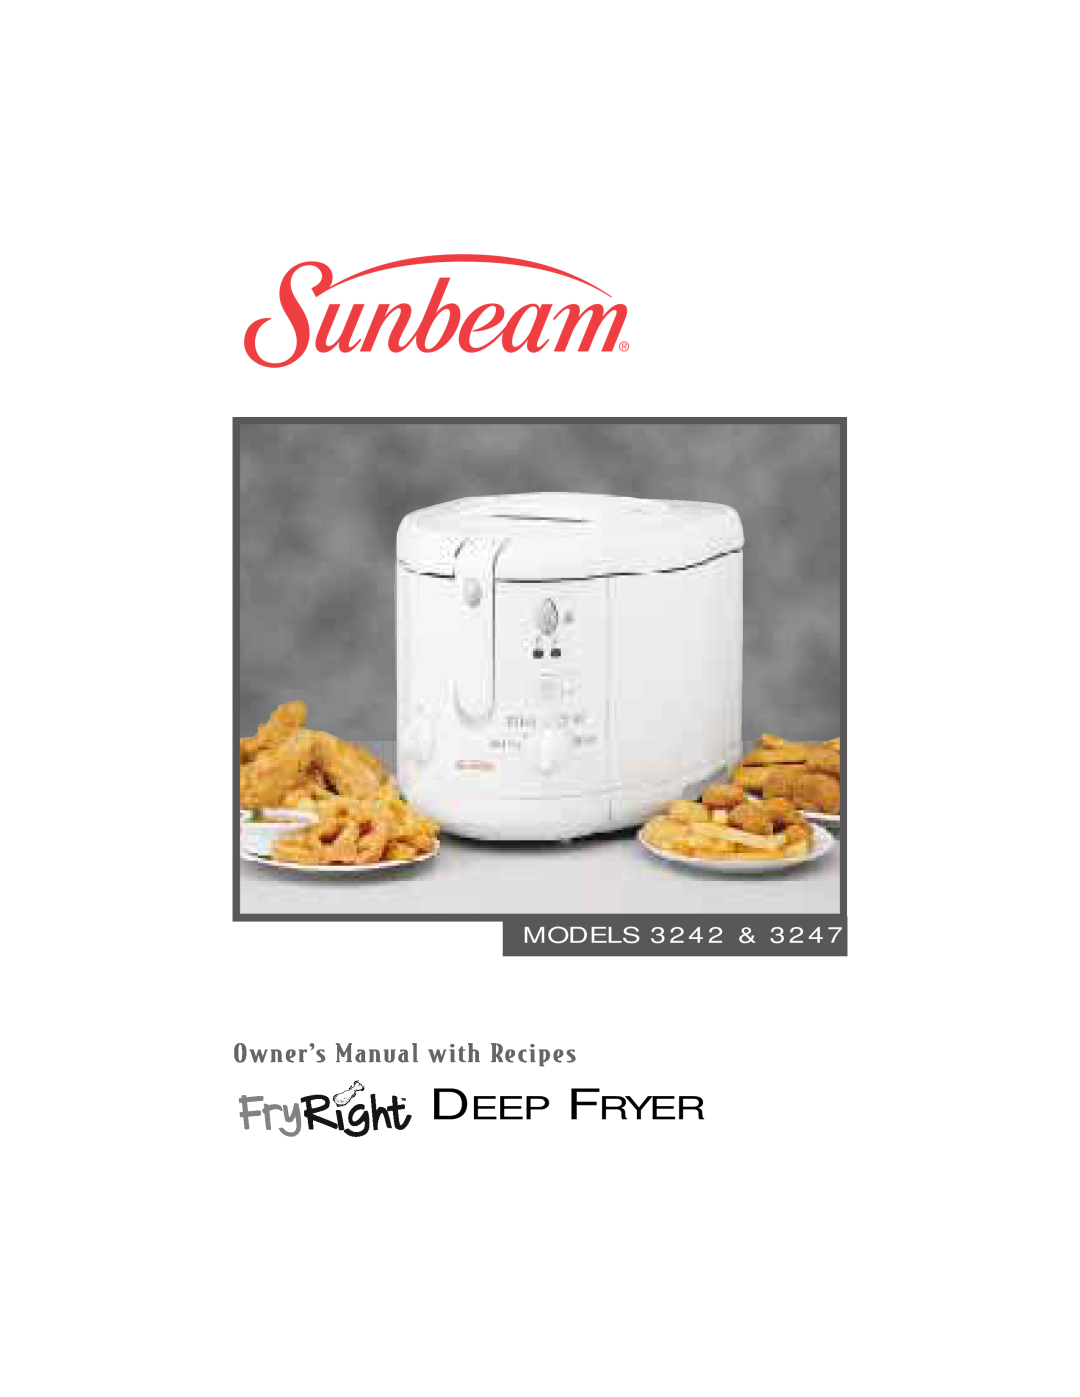 Sunbeam 3247 owner manual Deep Fryer, MODELS 3242, OwnerÕs Manual with Recipes 